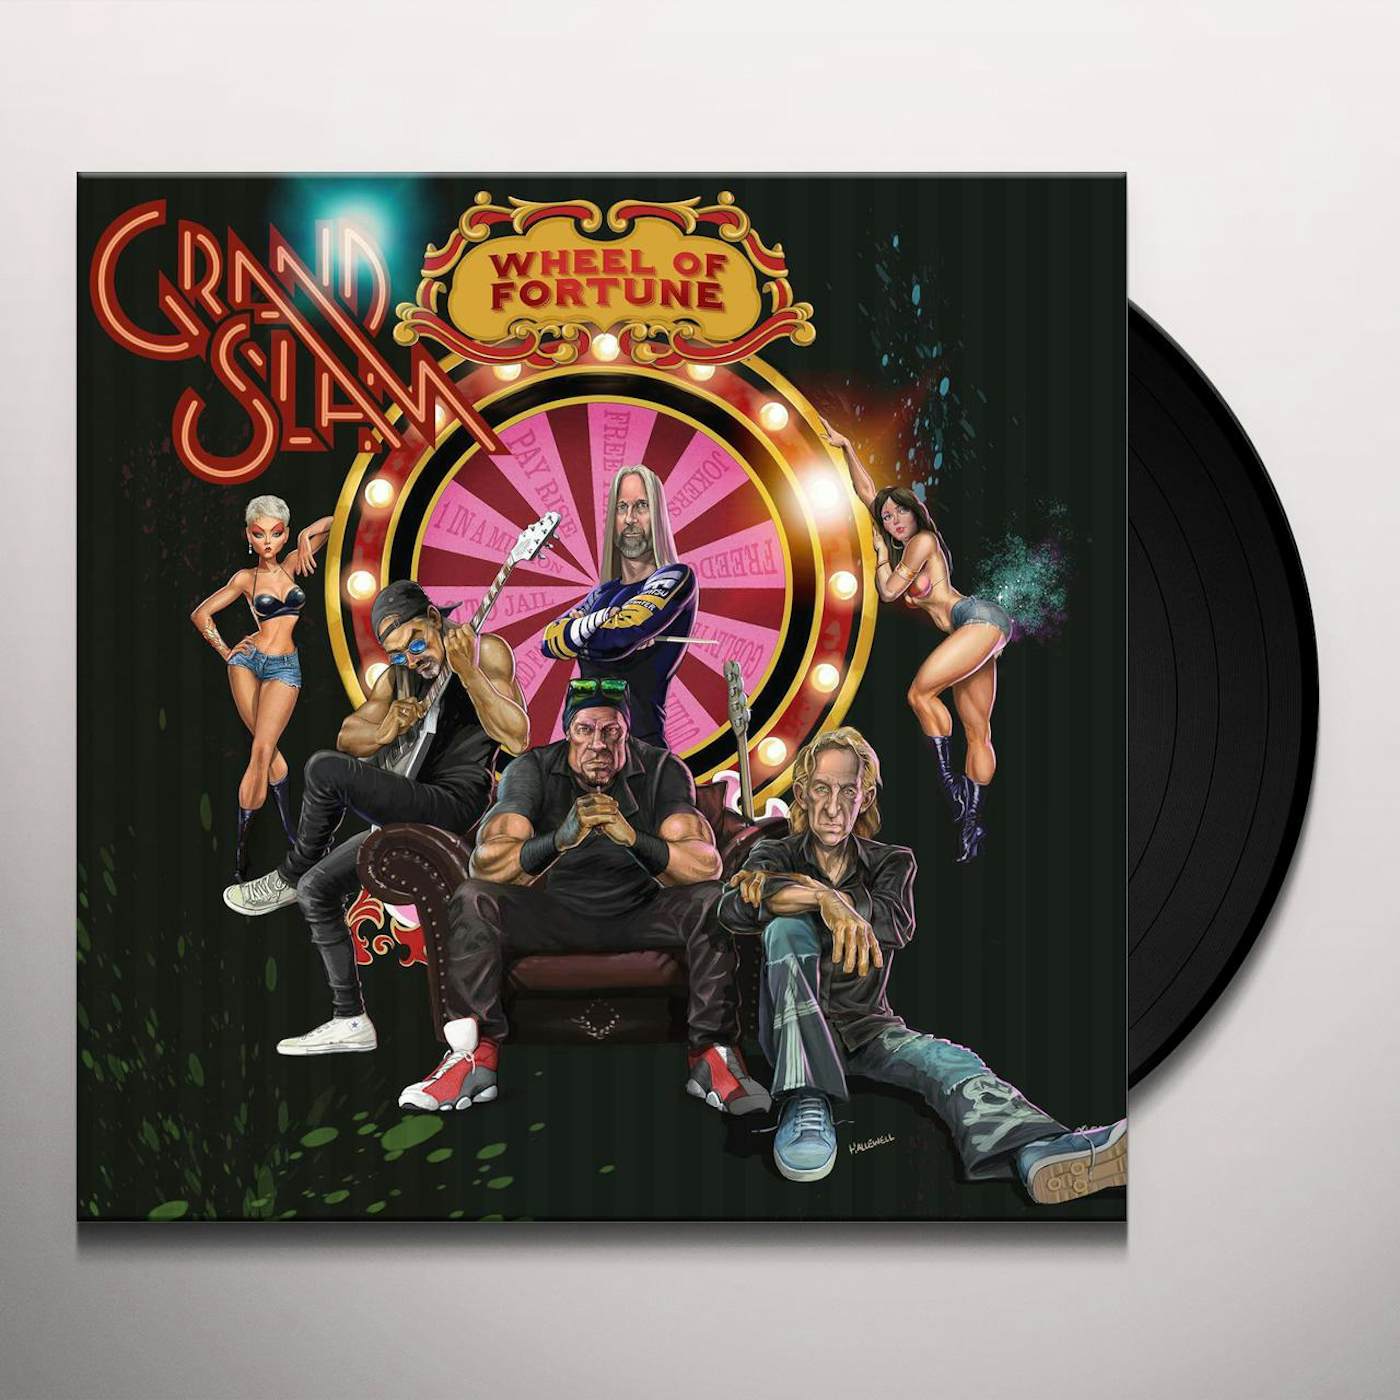 Grand Slam Wheel Of Fortune Vinyl Record